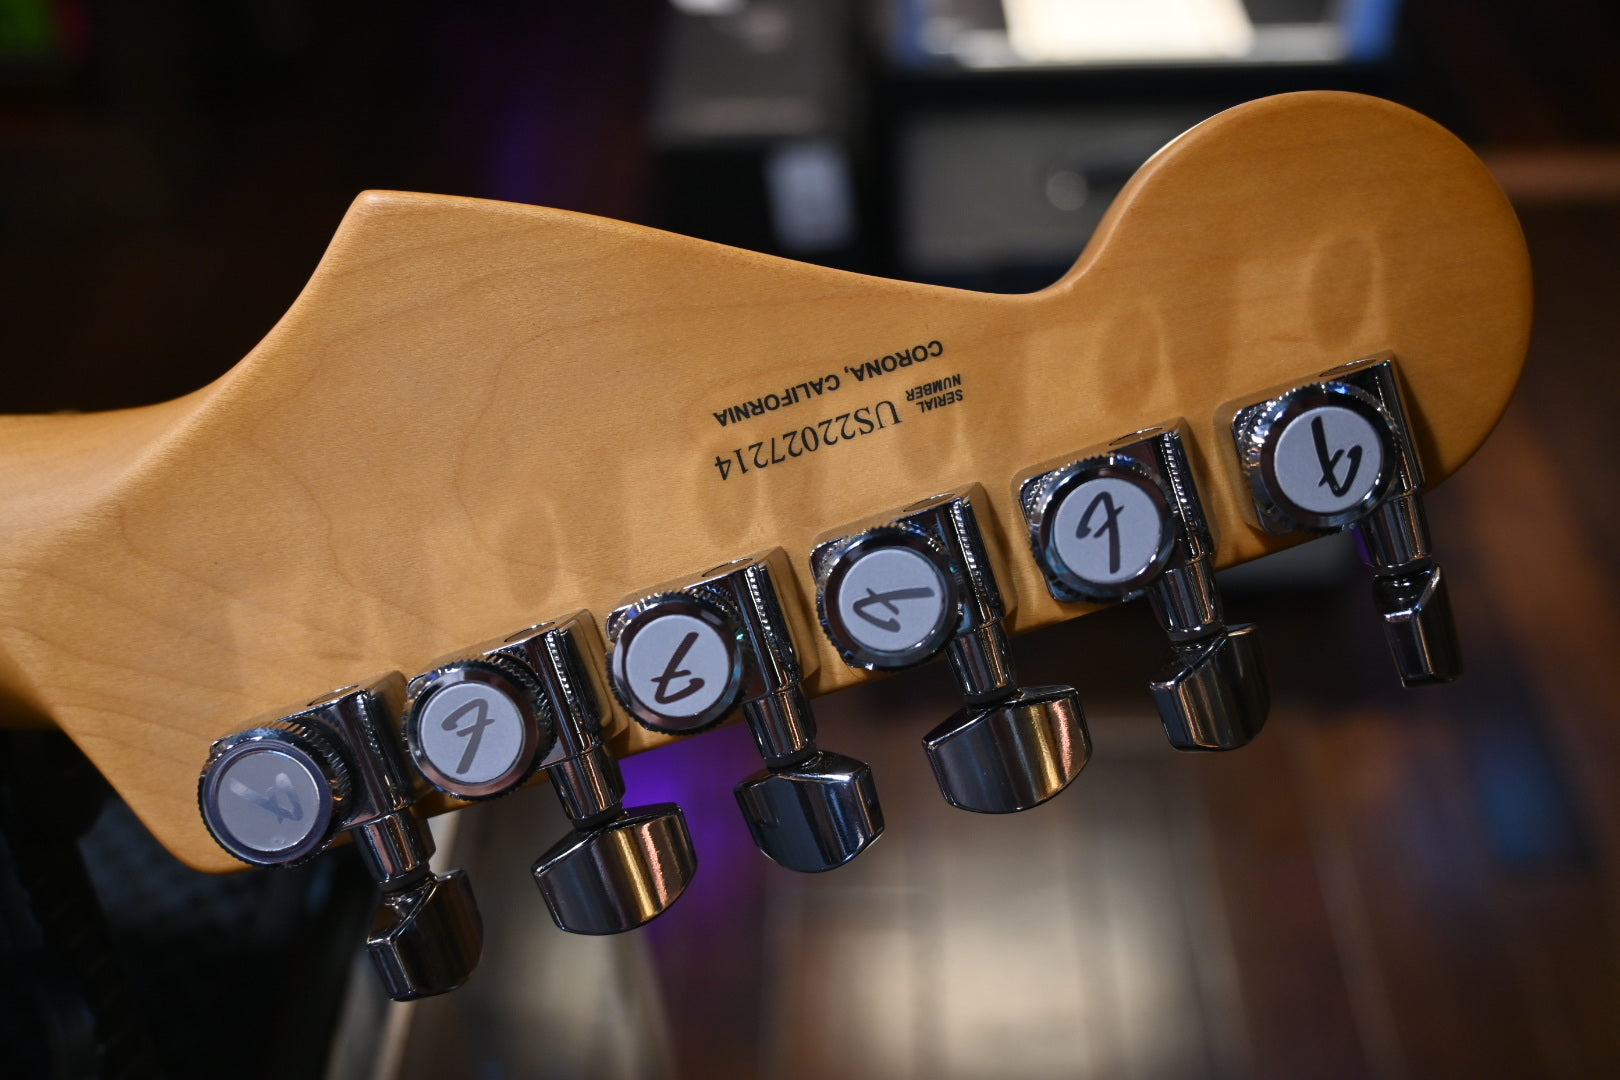 Fender American Ultra Stratocaster 2022 - Tobacco Burst Guitar #7214 PRE-OWNED - Danville Music